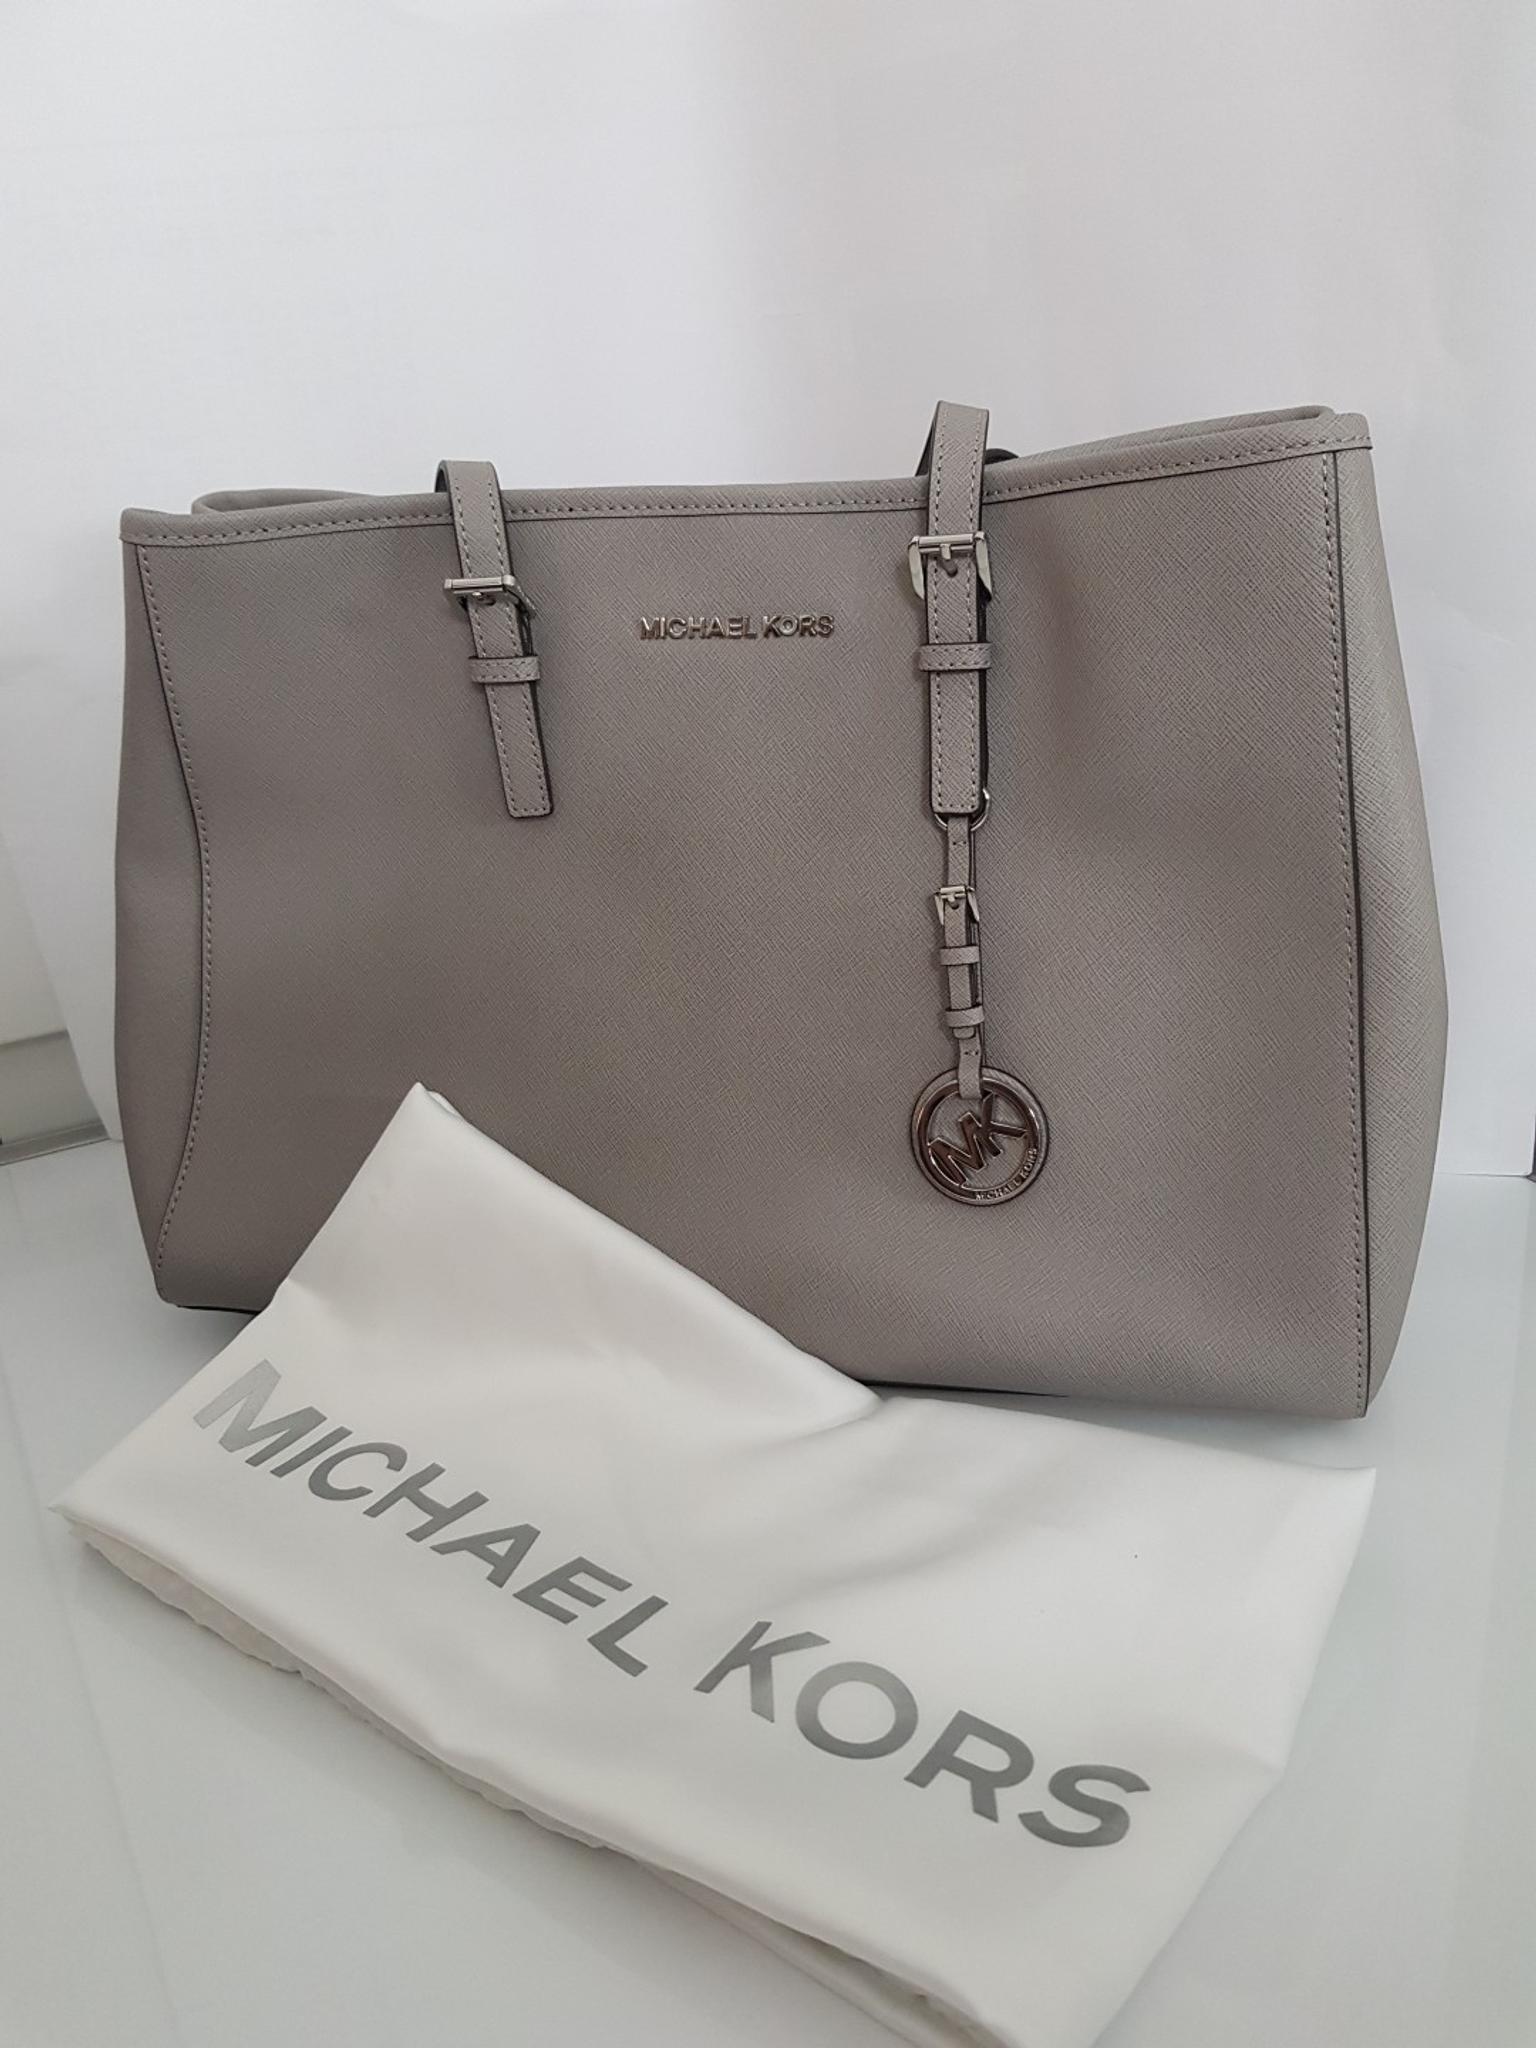 mk grey handbag